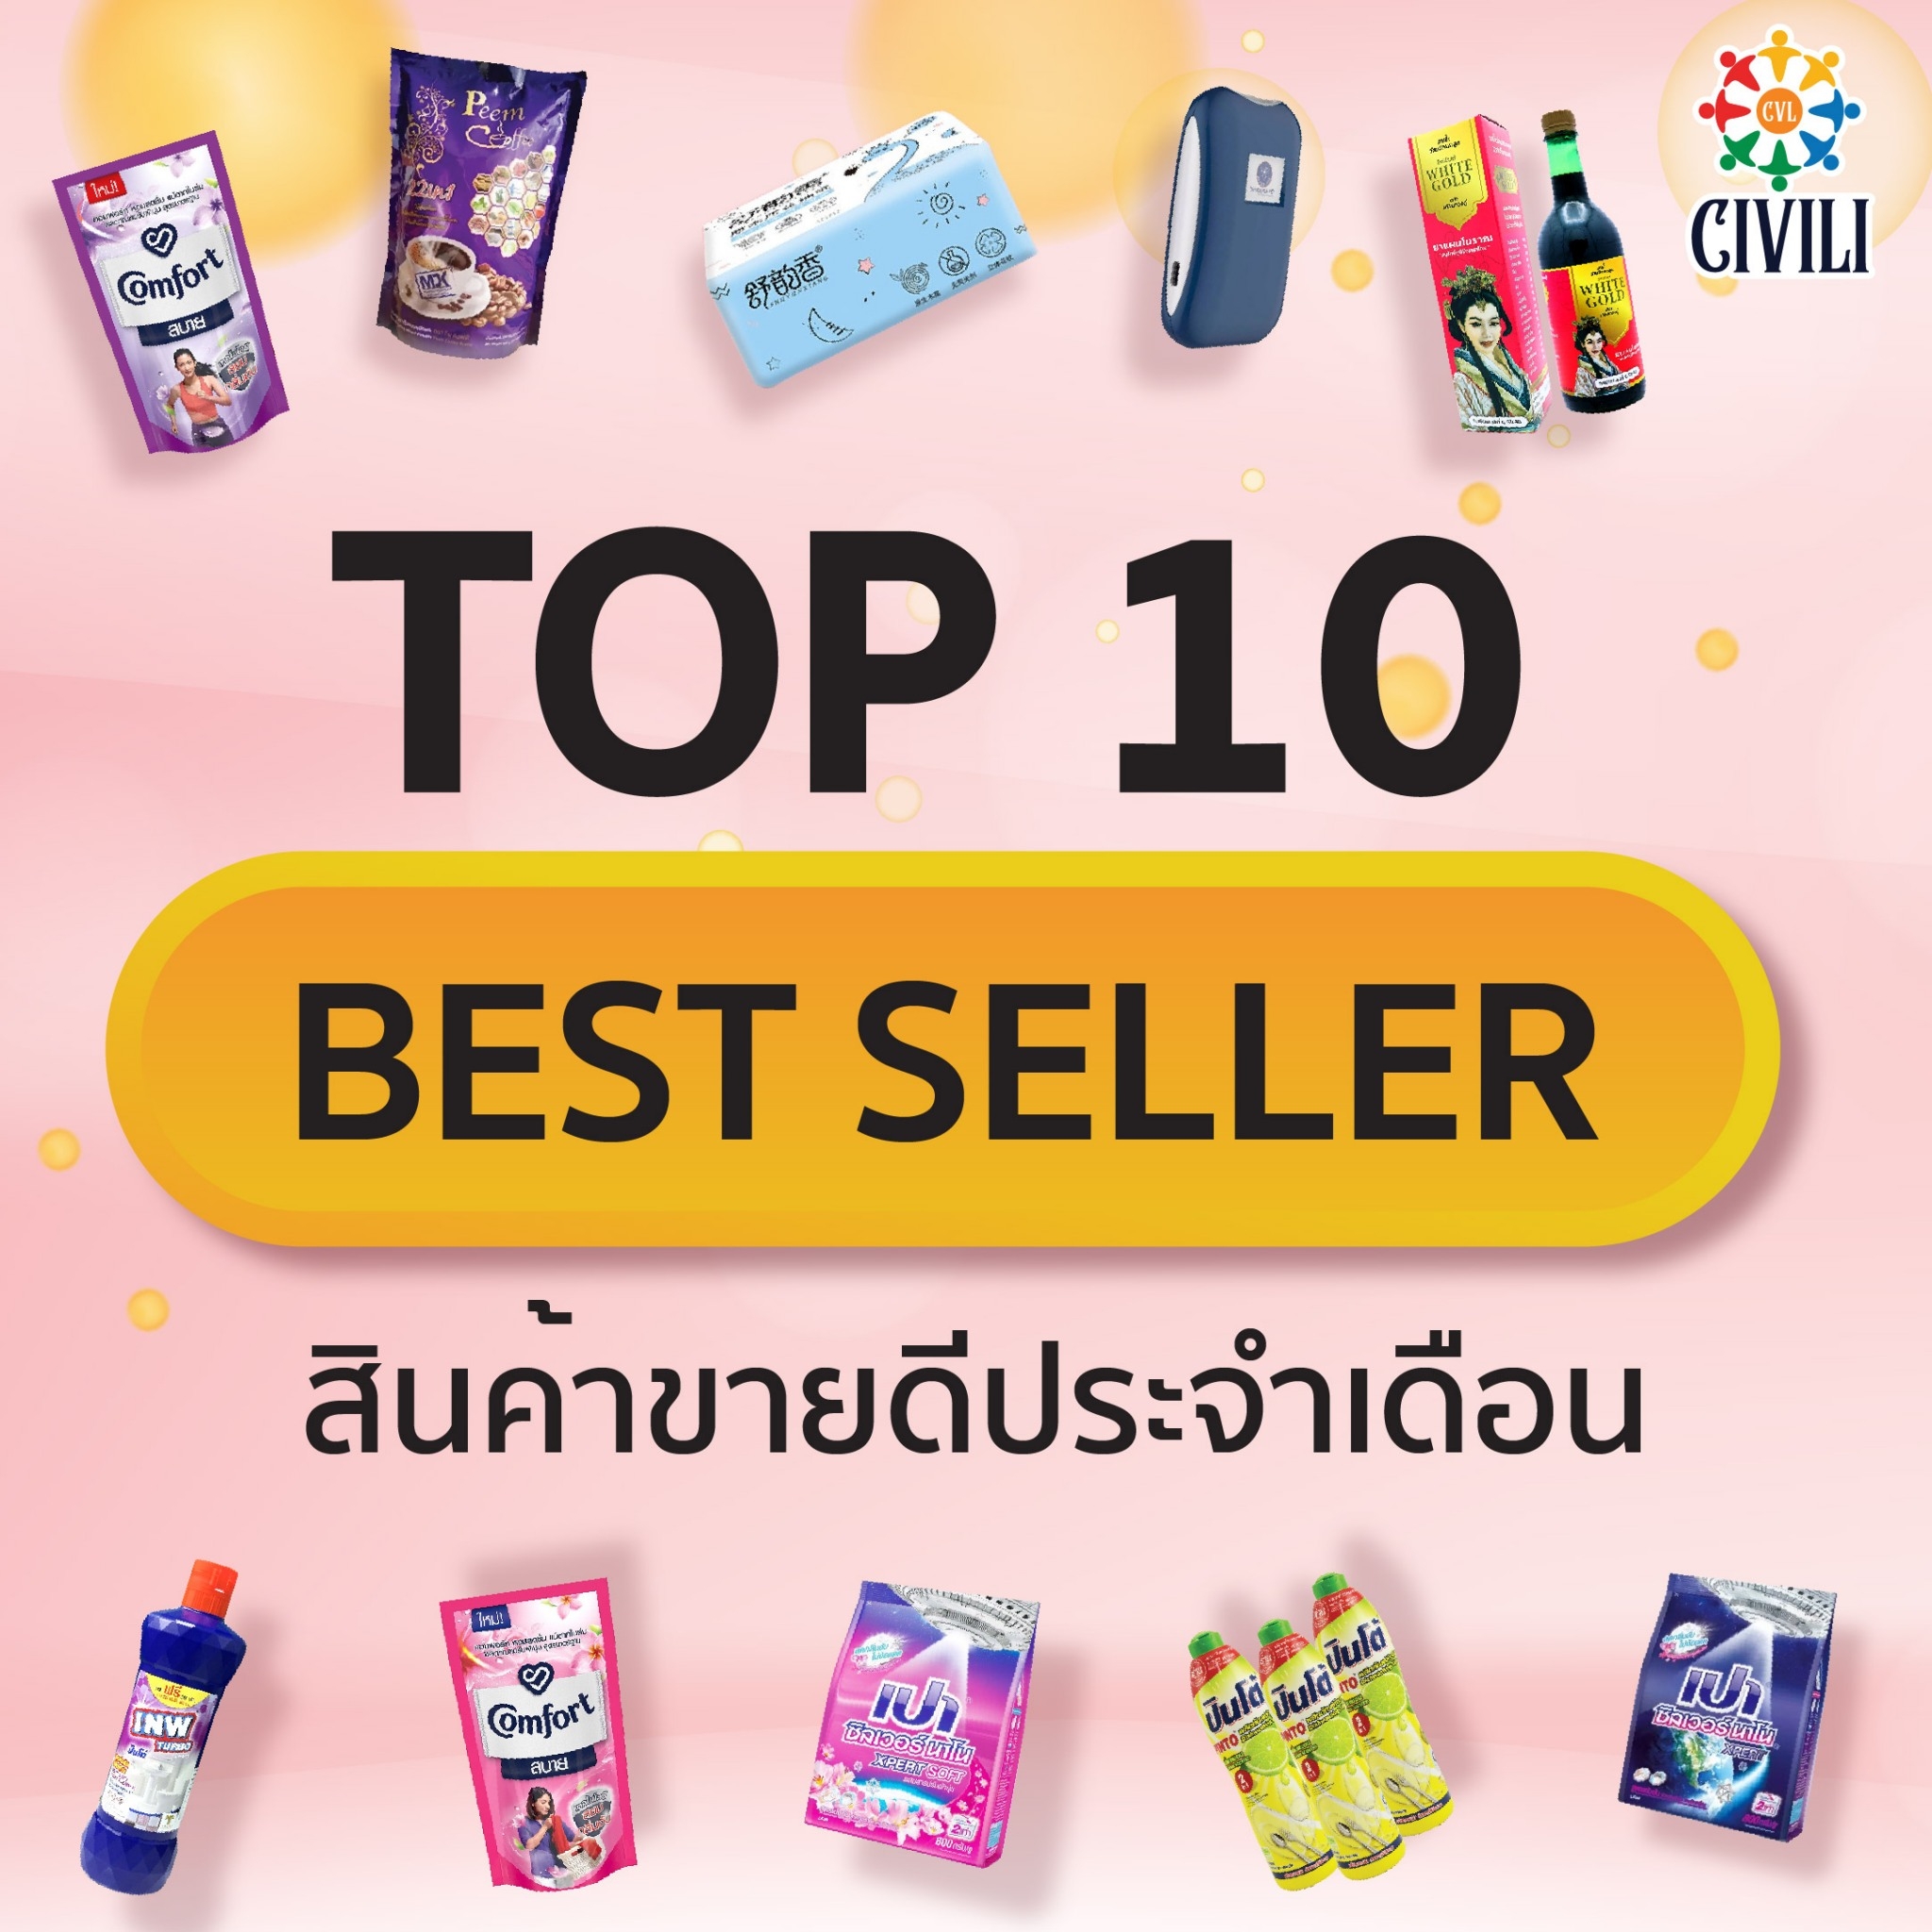 🎉 TOP 10 BEST SELLER  สินค้าขายดีประจำเดือน 🎉